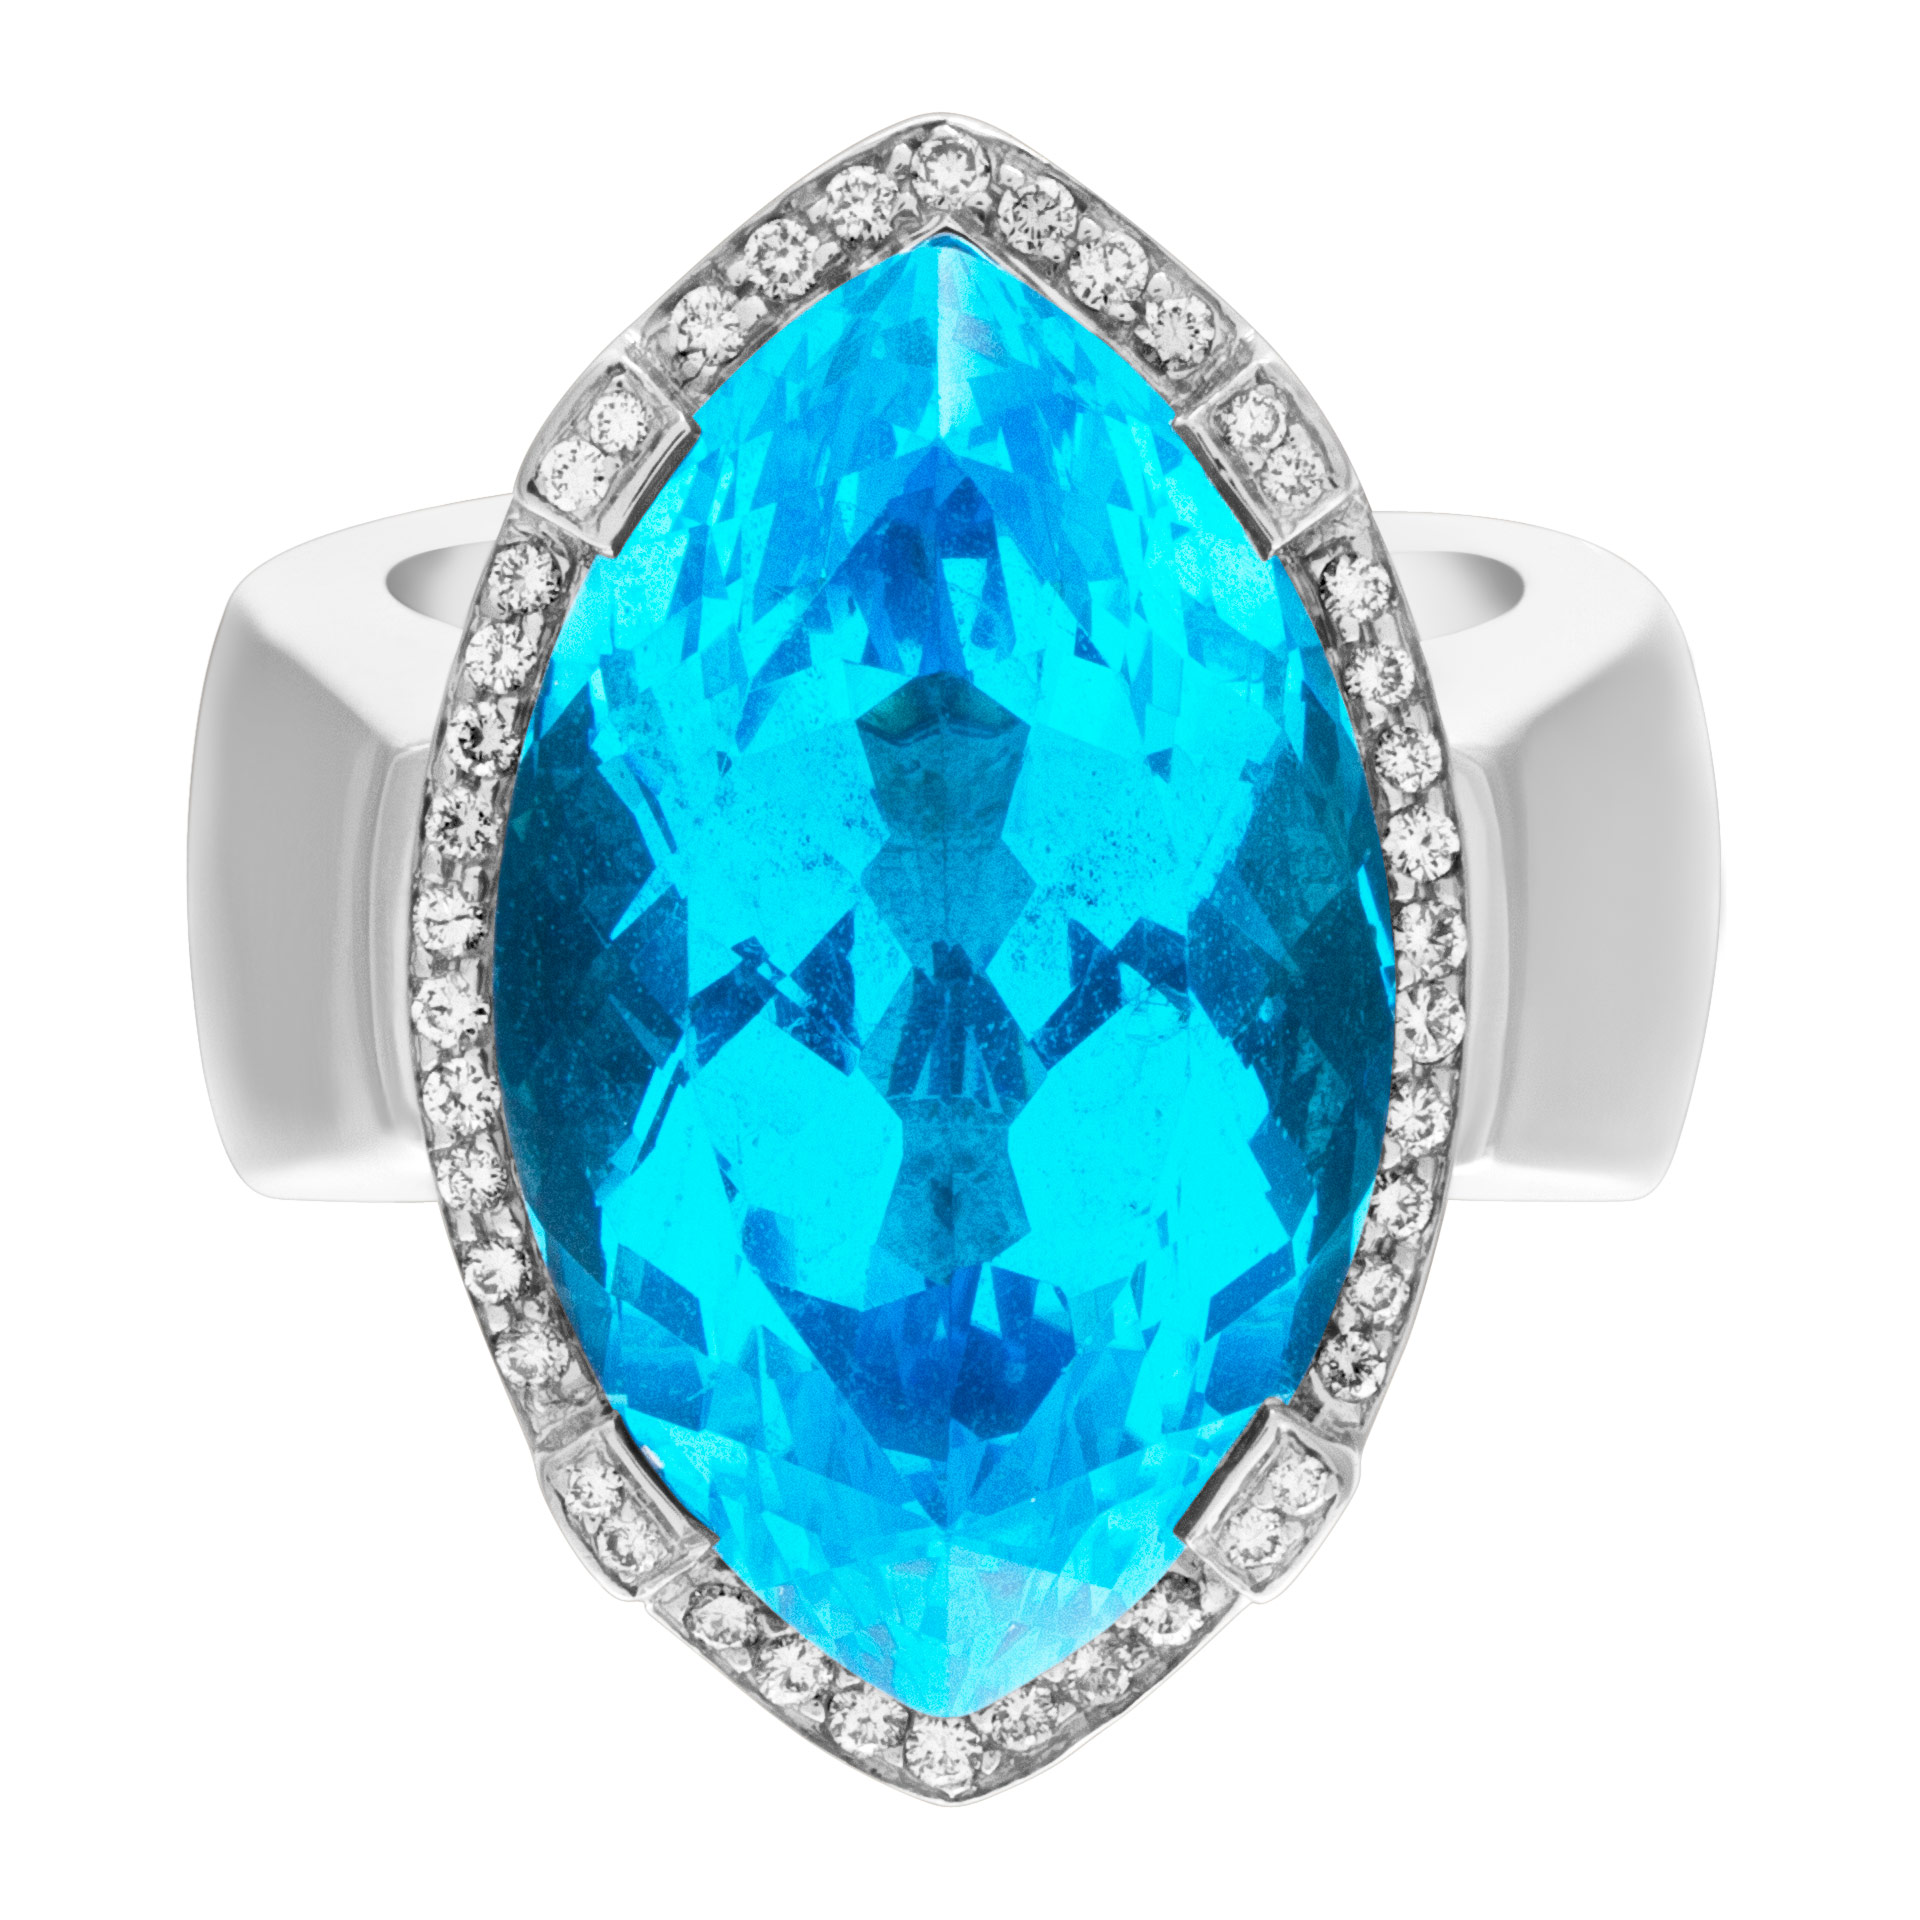 Marquise cut Blue topaz & diamonds ring set in 18k white gold.